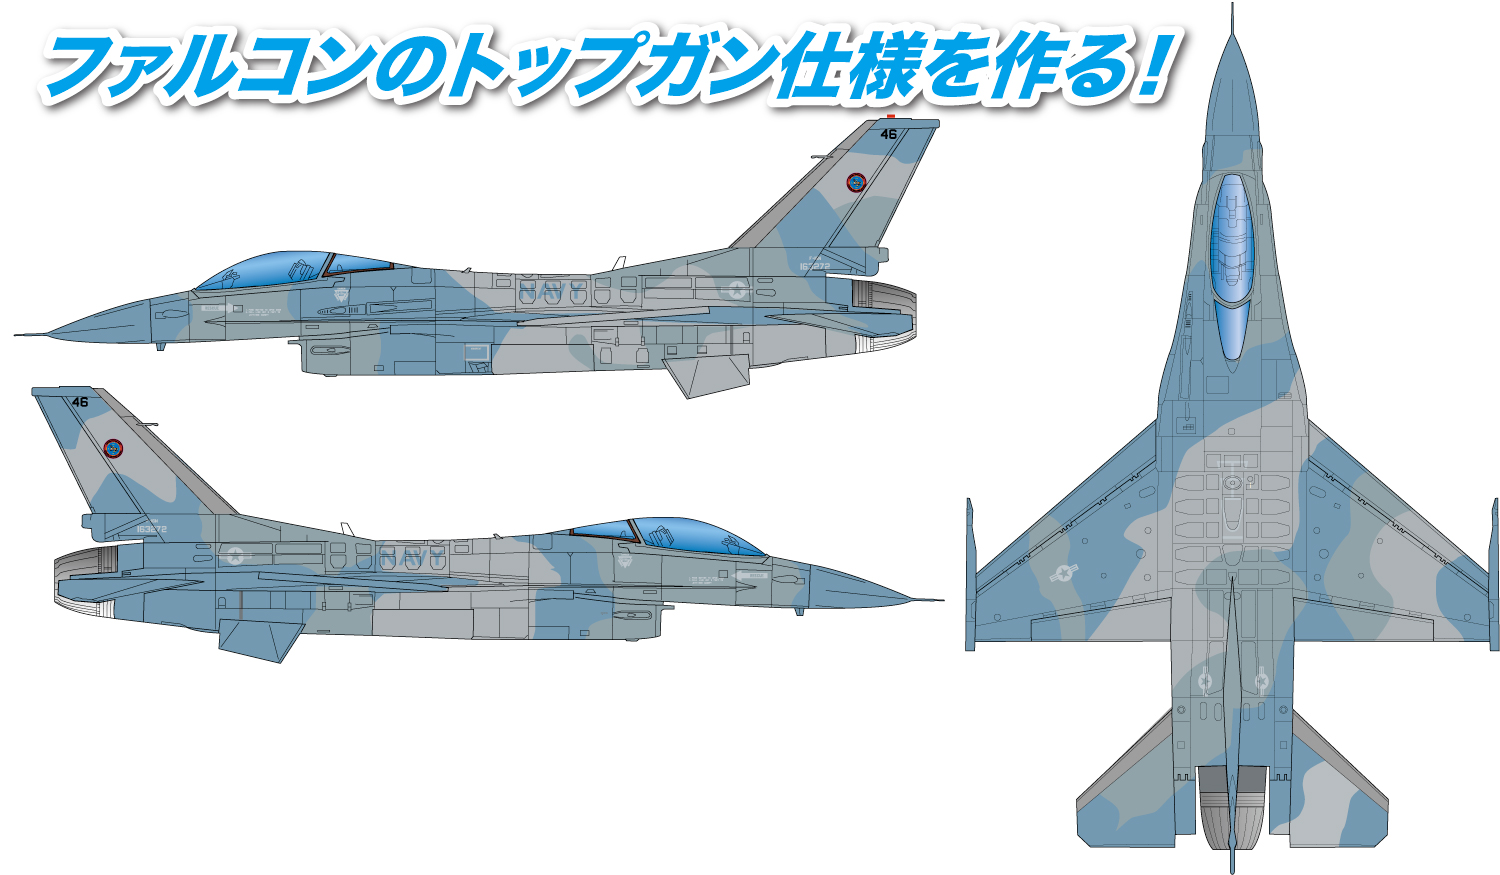 PLATZ 1/144 JASDF F-104J